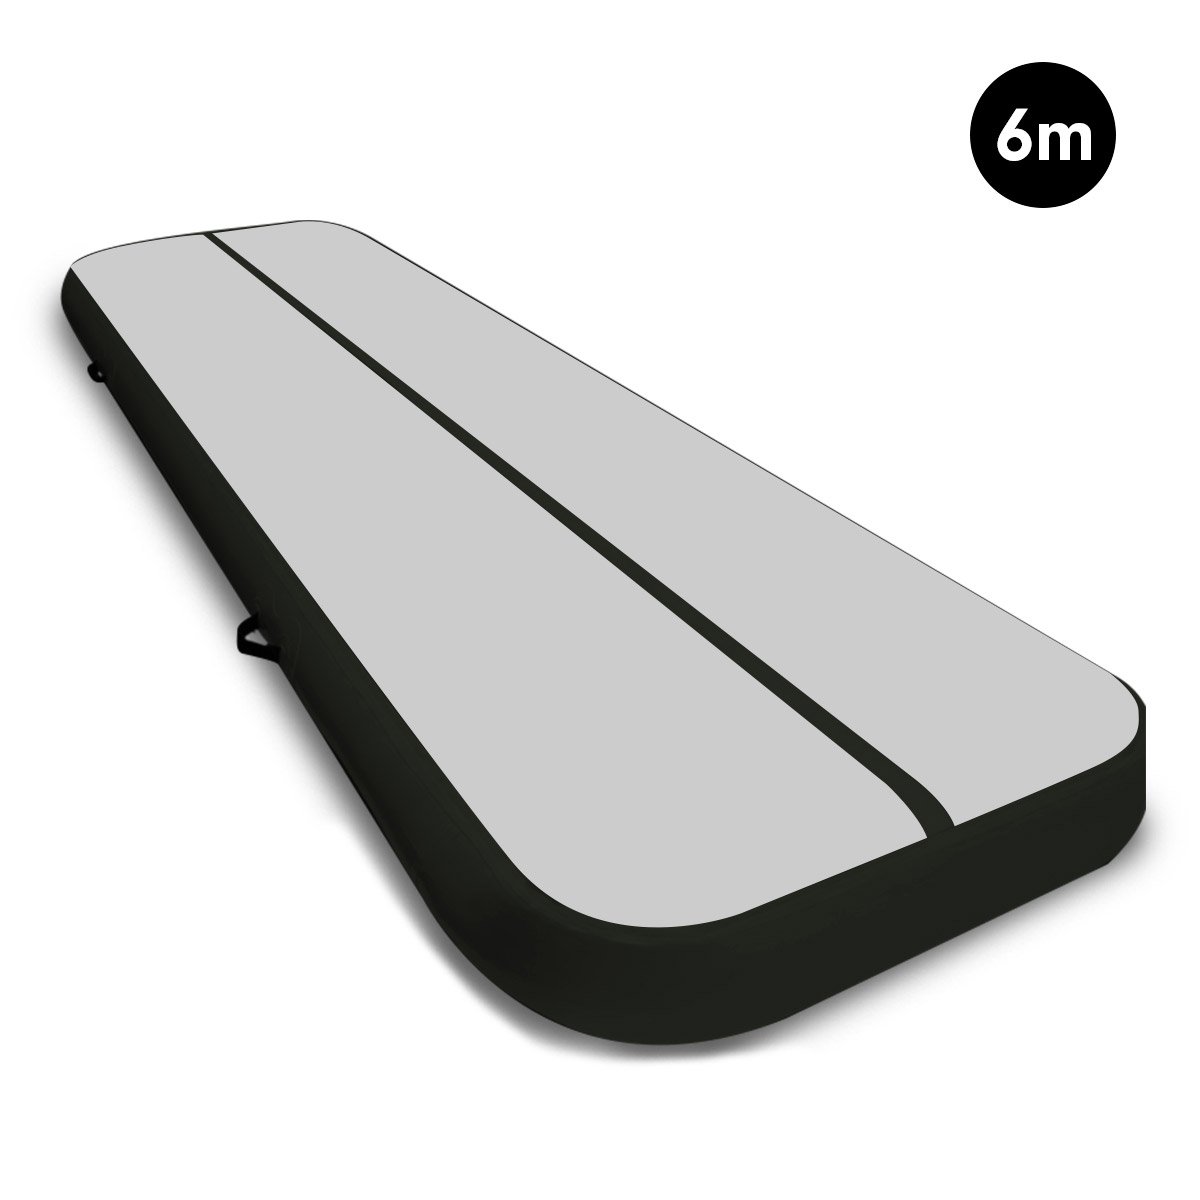 6m x 1m Air Track Inflatable Tumbling Mat Gymnastics - Grey Black 2